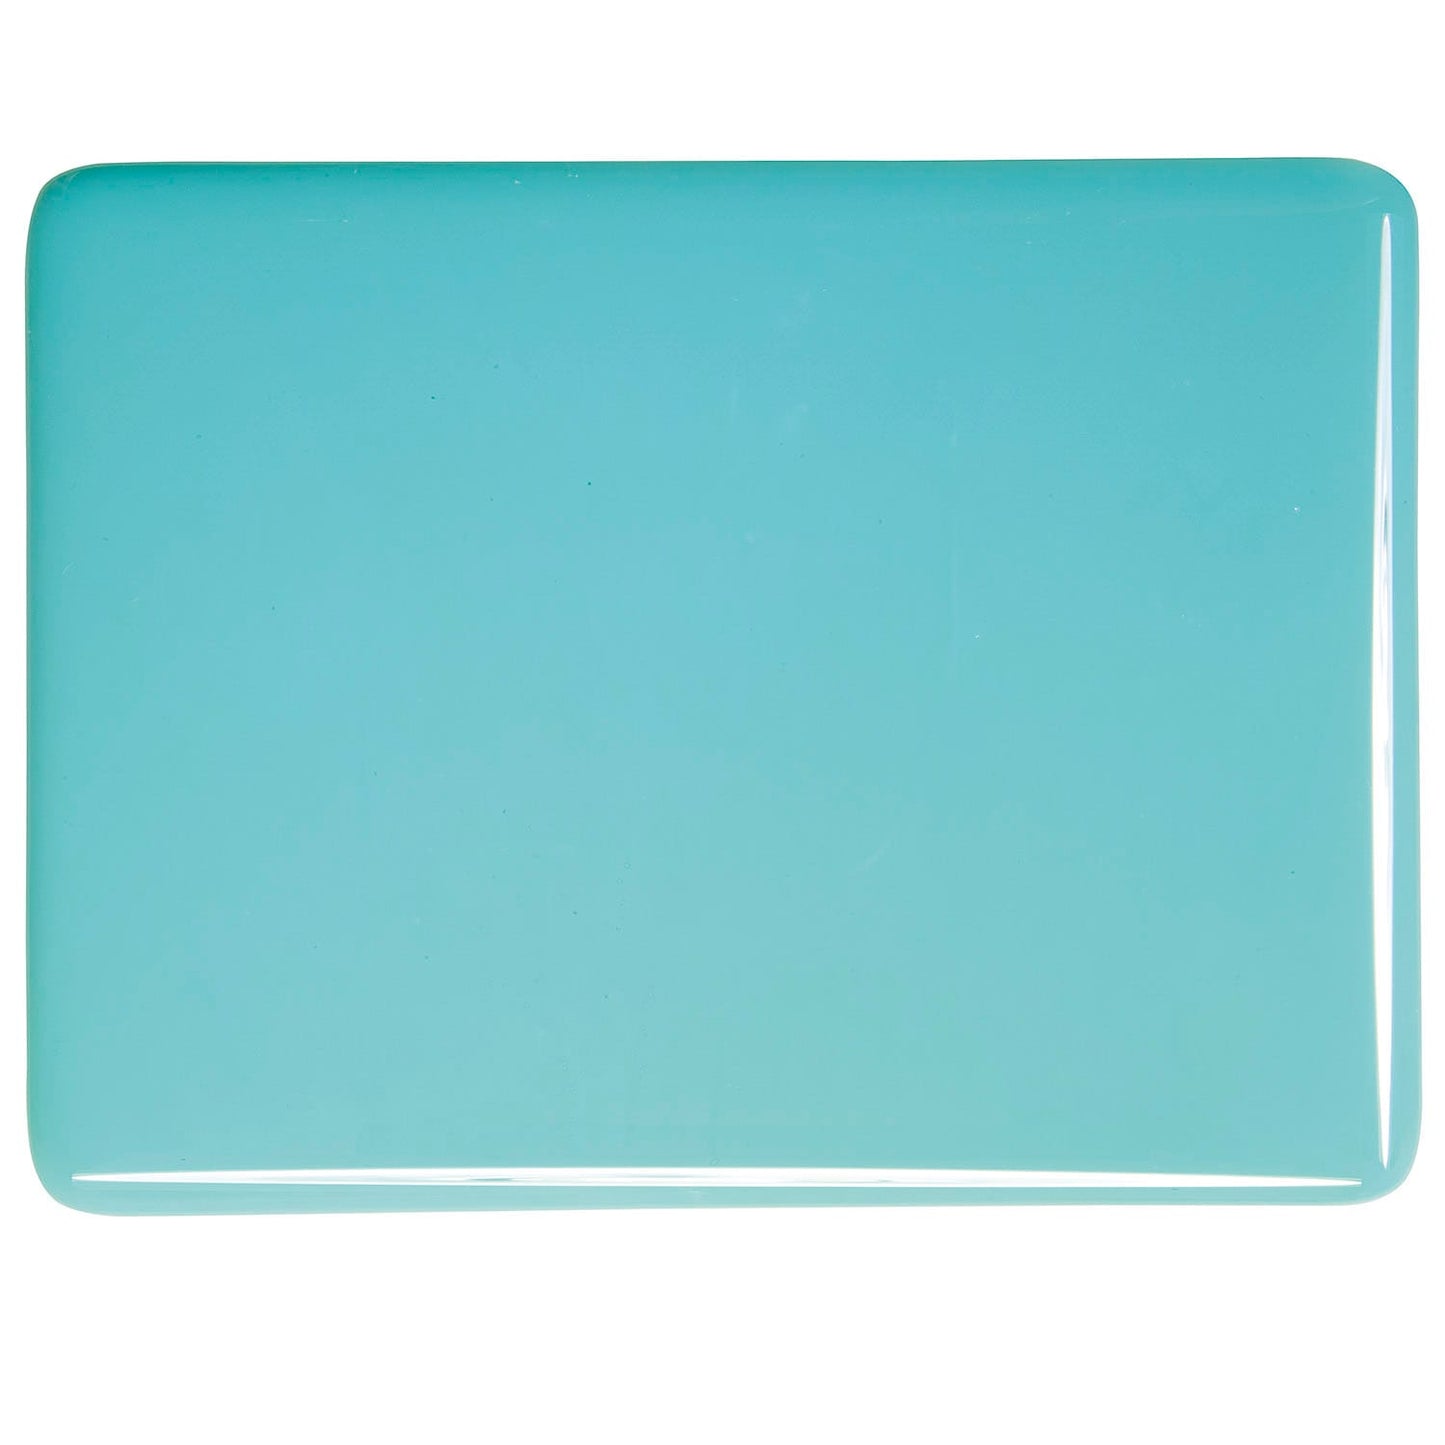 Bullseye COE90 Fusing Glass 000116 Turquoise Blue Handy Sheet